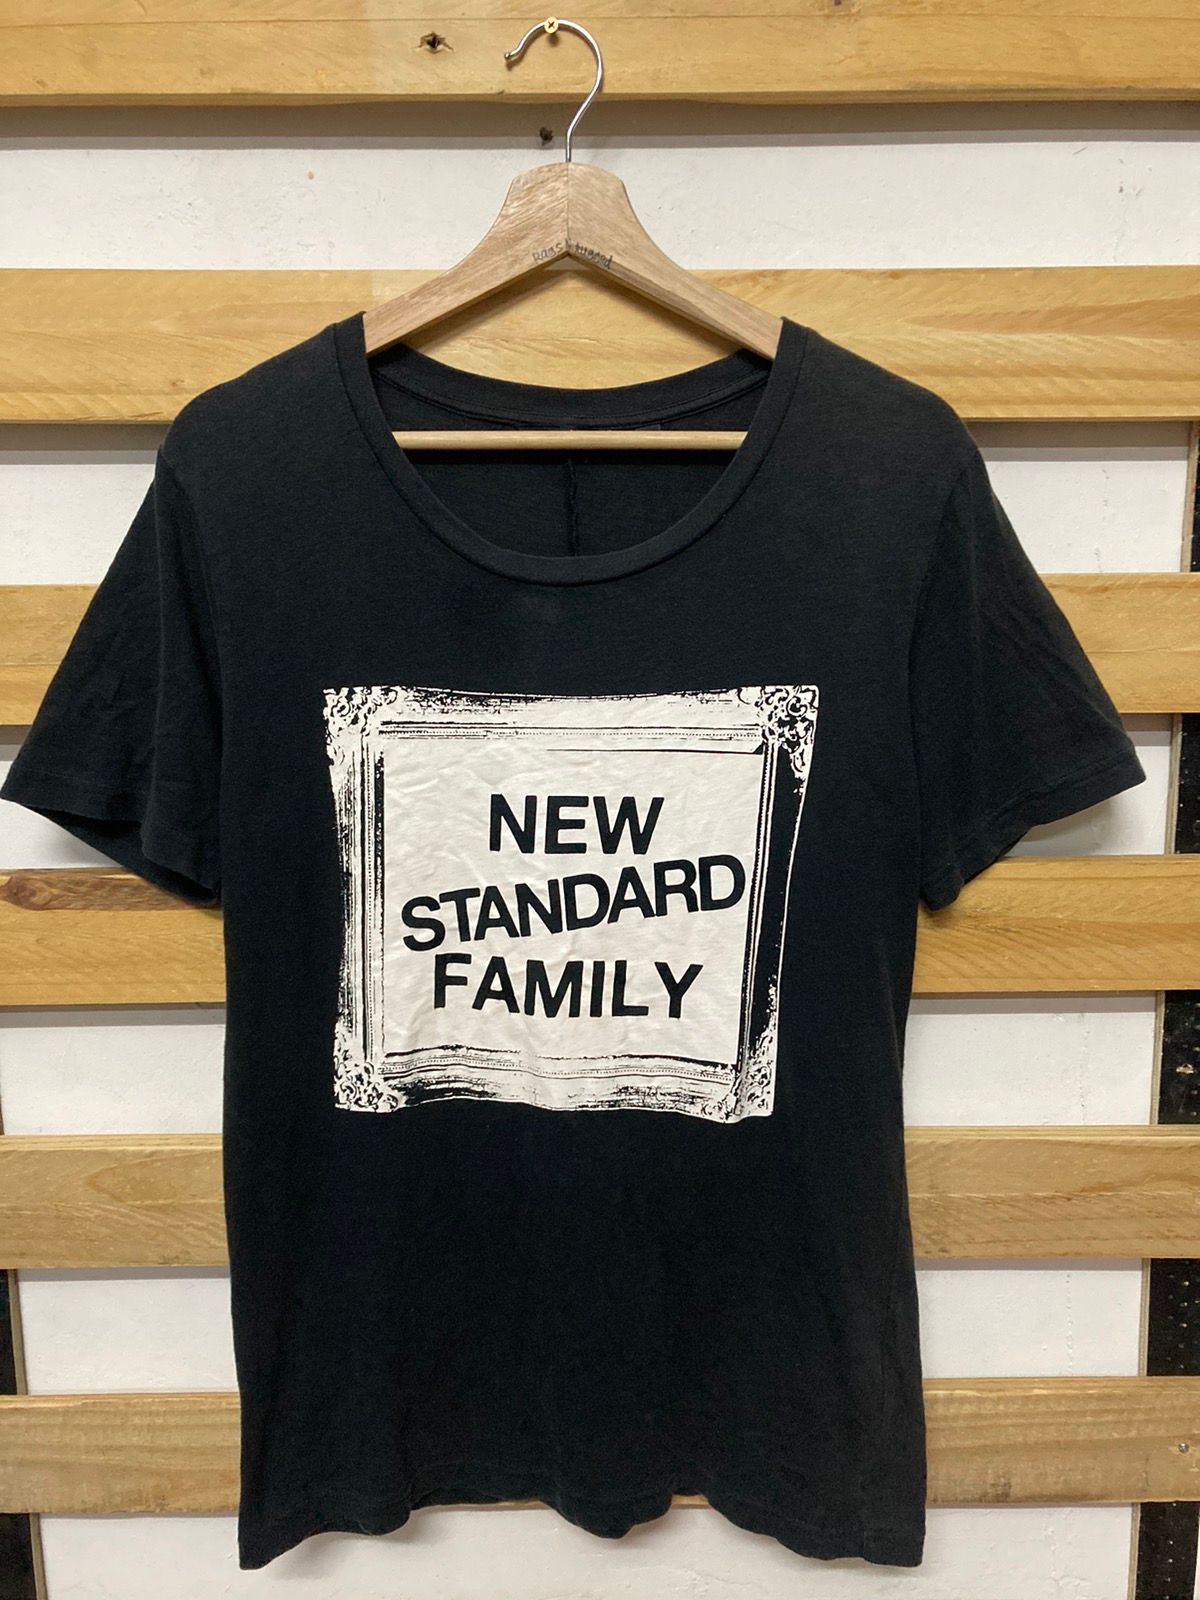 Uniqlo x Undercover New Standard Family Tshirt - 1